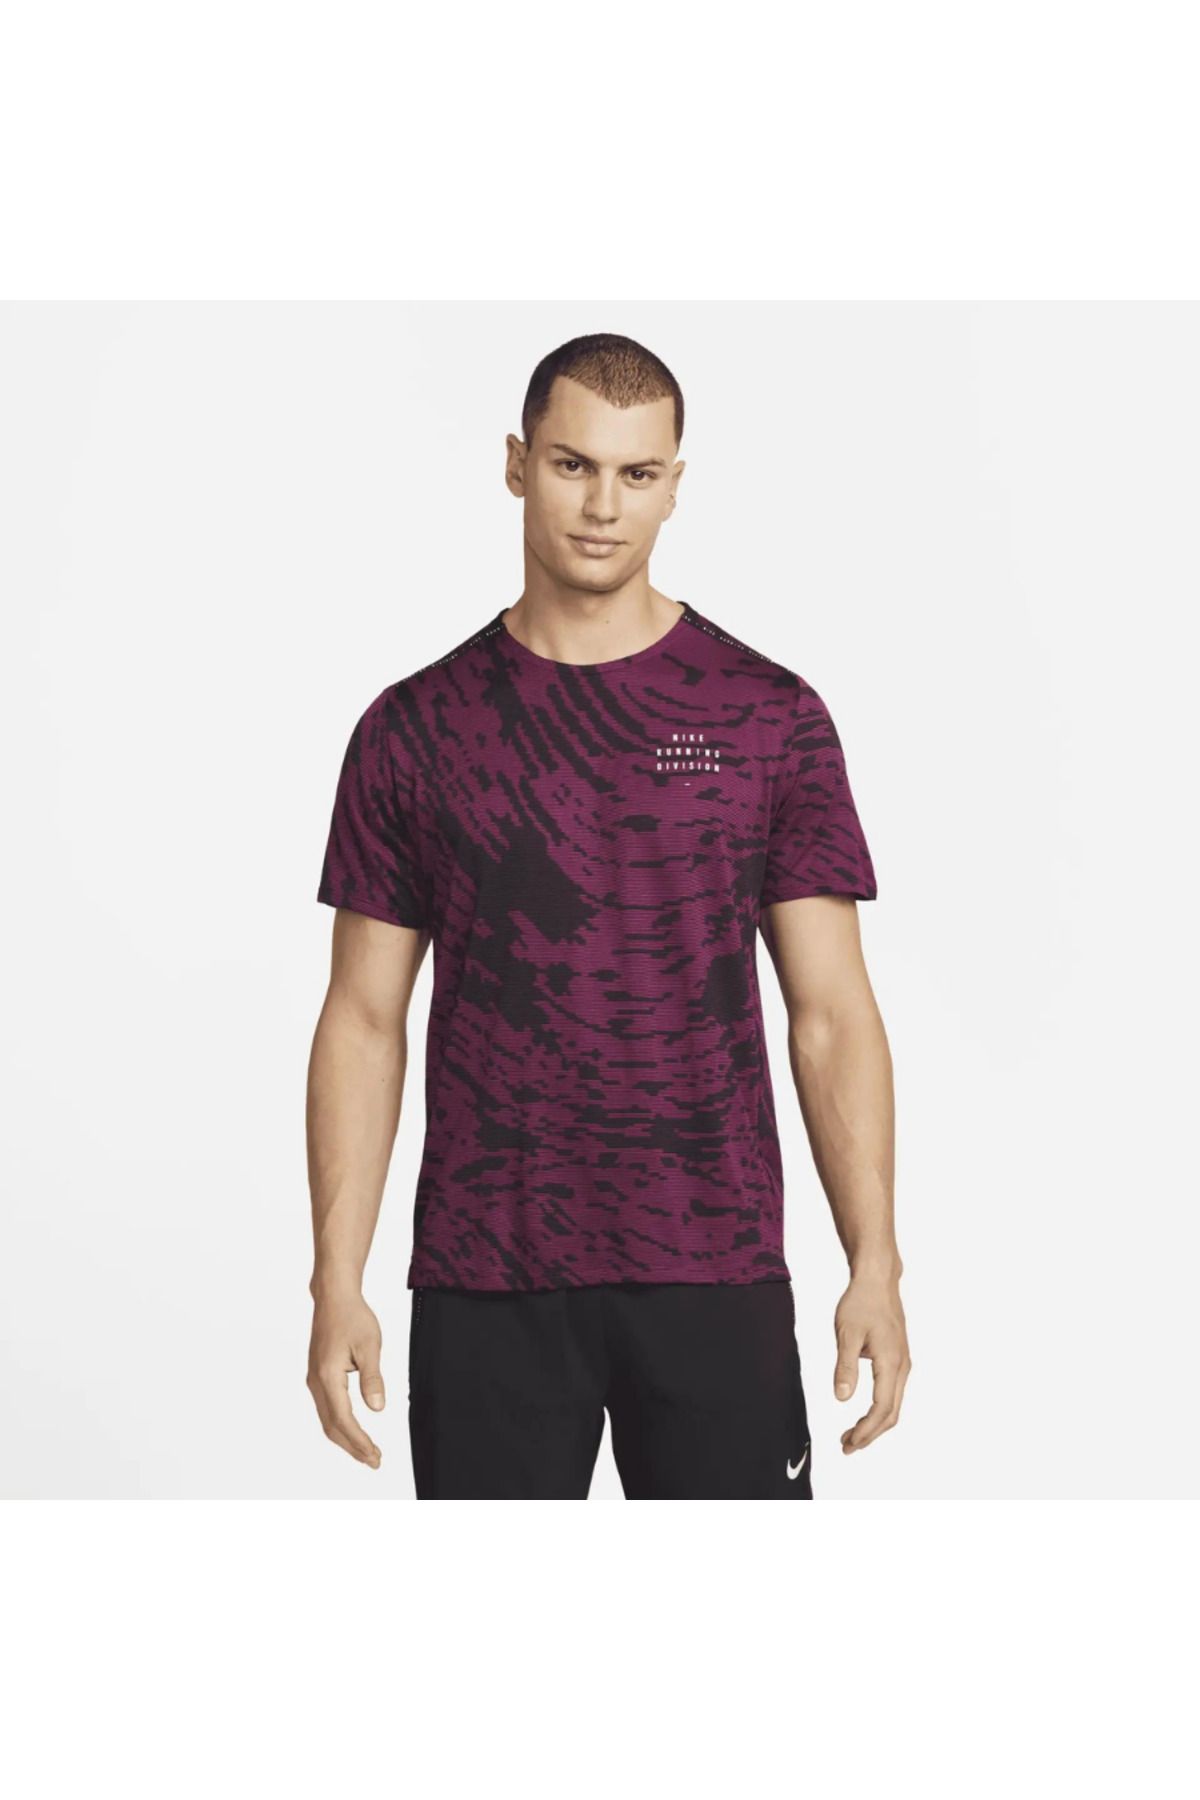 Nike Dri-FIT Running Division Tech Erkek Spor T-Shirt DM4636-610-On7Sports